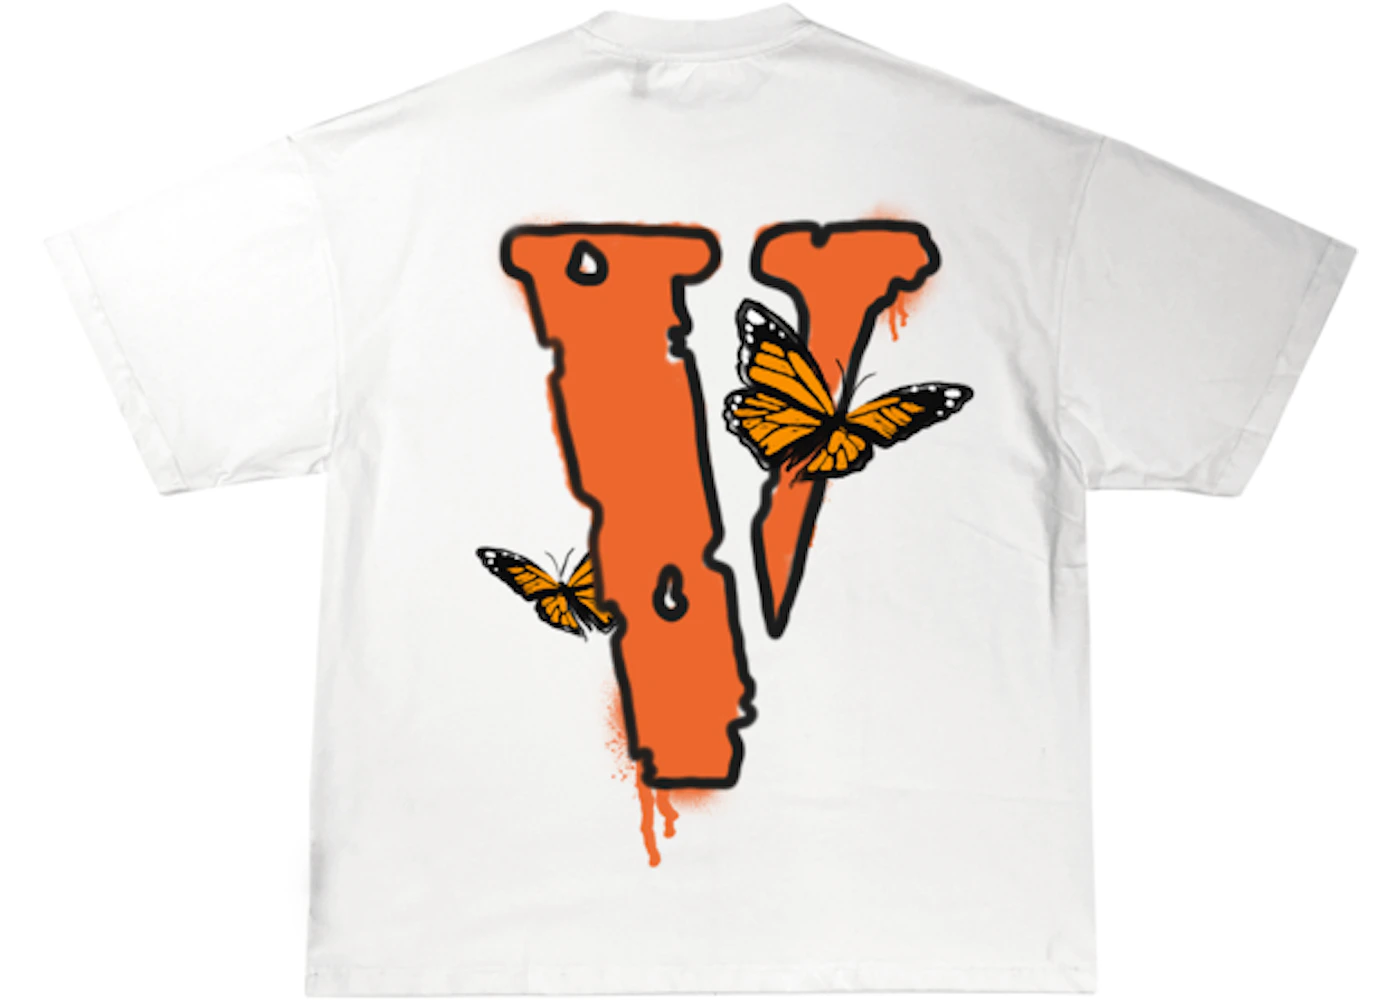 Juice Wrld x Vlone Butterfly T-Shirt White - SS20